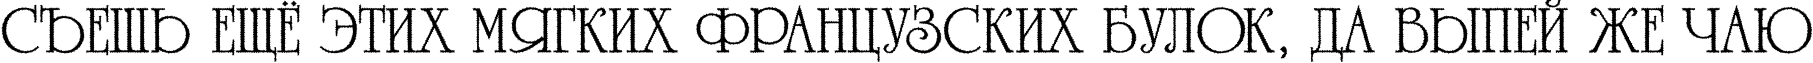 Пример написания шрифтом a_RomanusTitulRg текста на русском